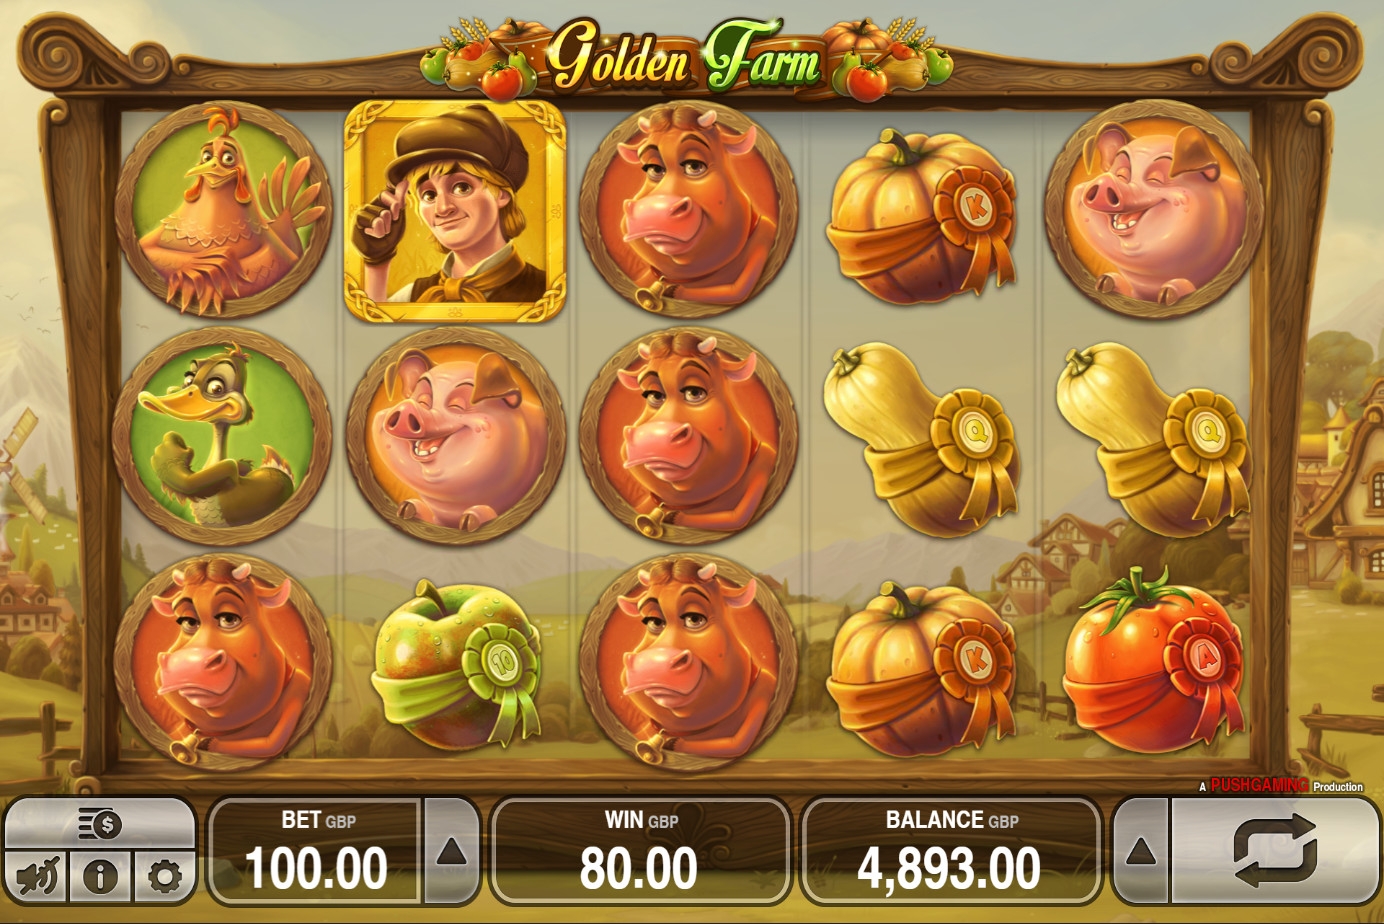 Golden Farm (Golden Farm) from category Slots